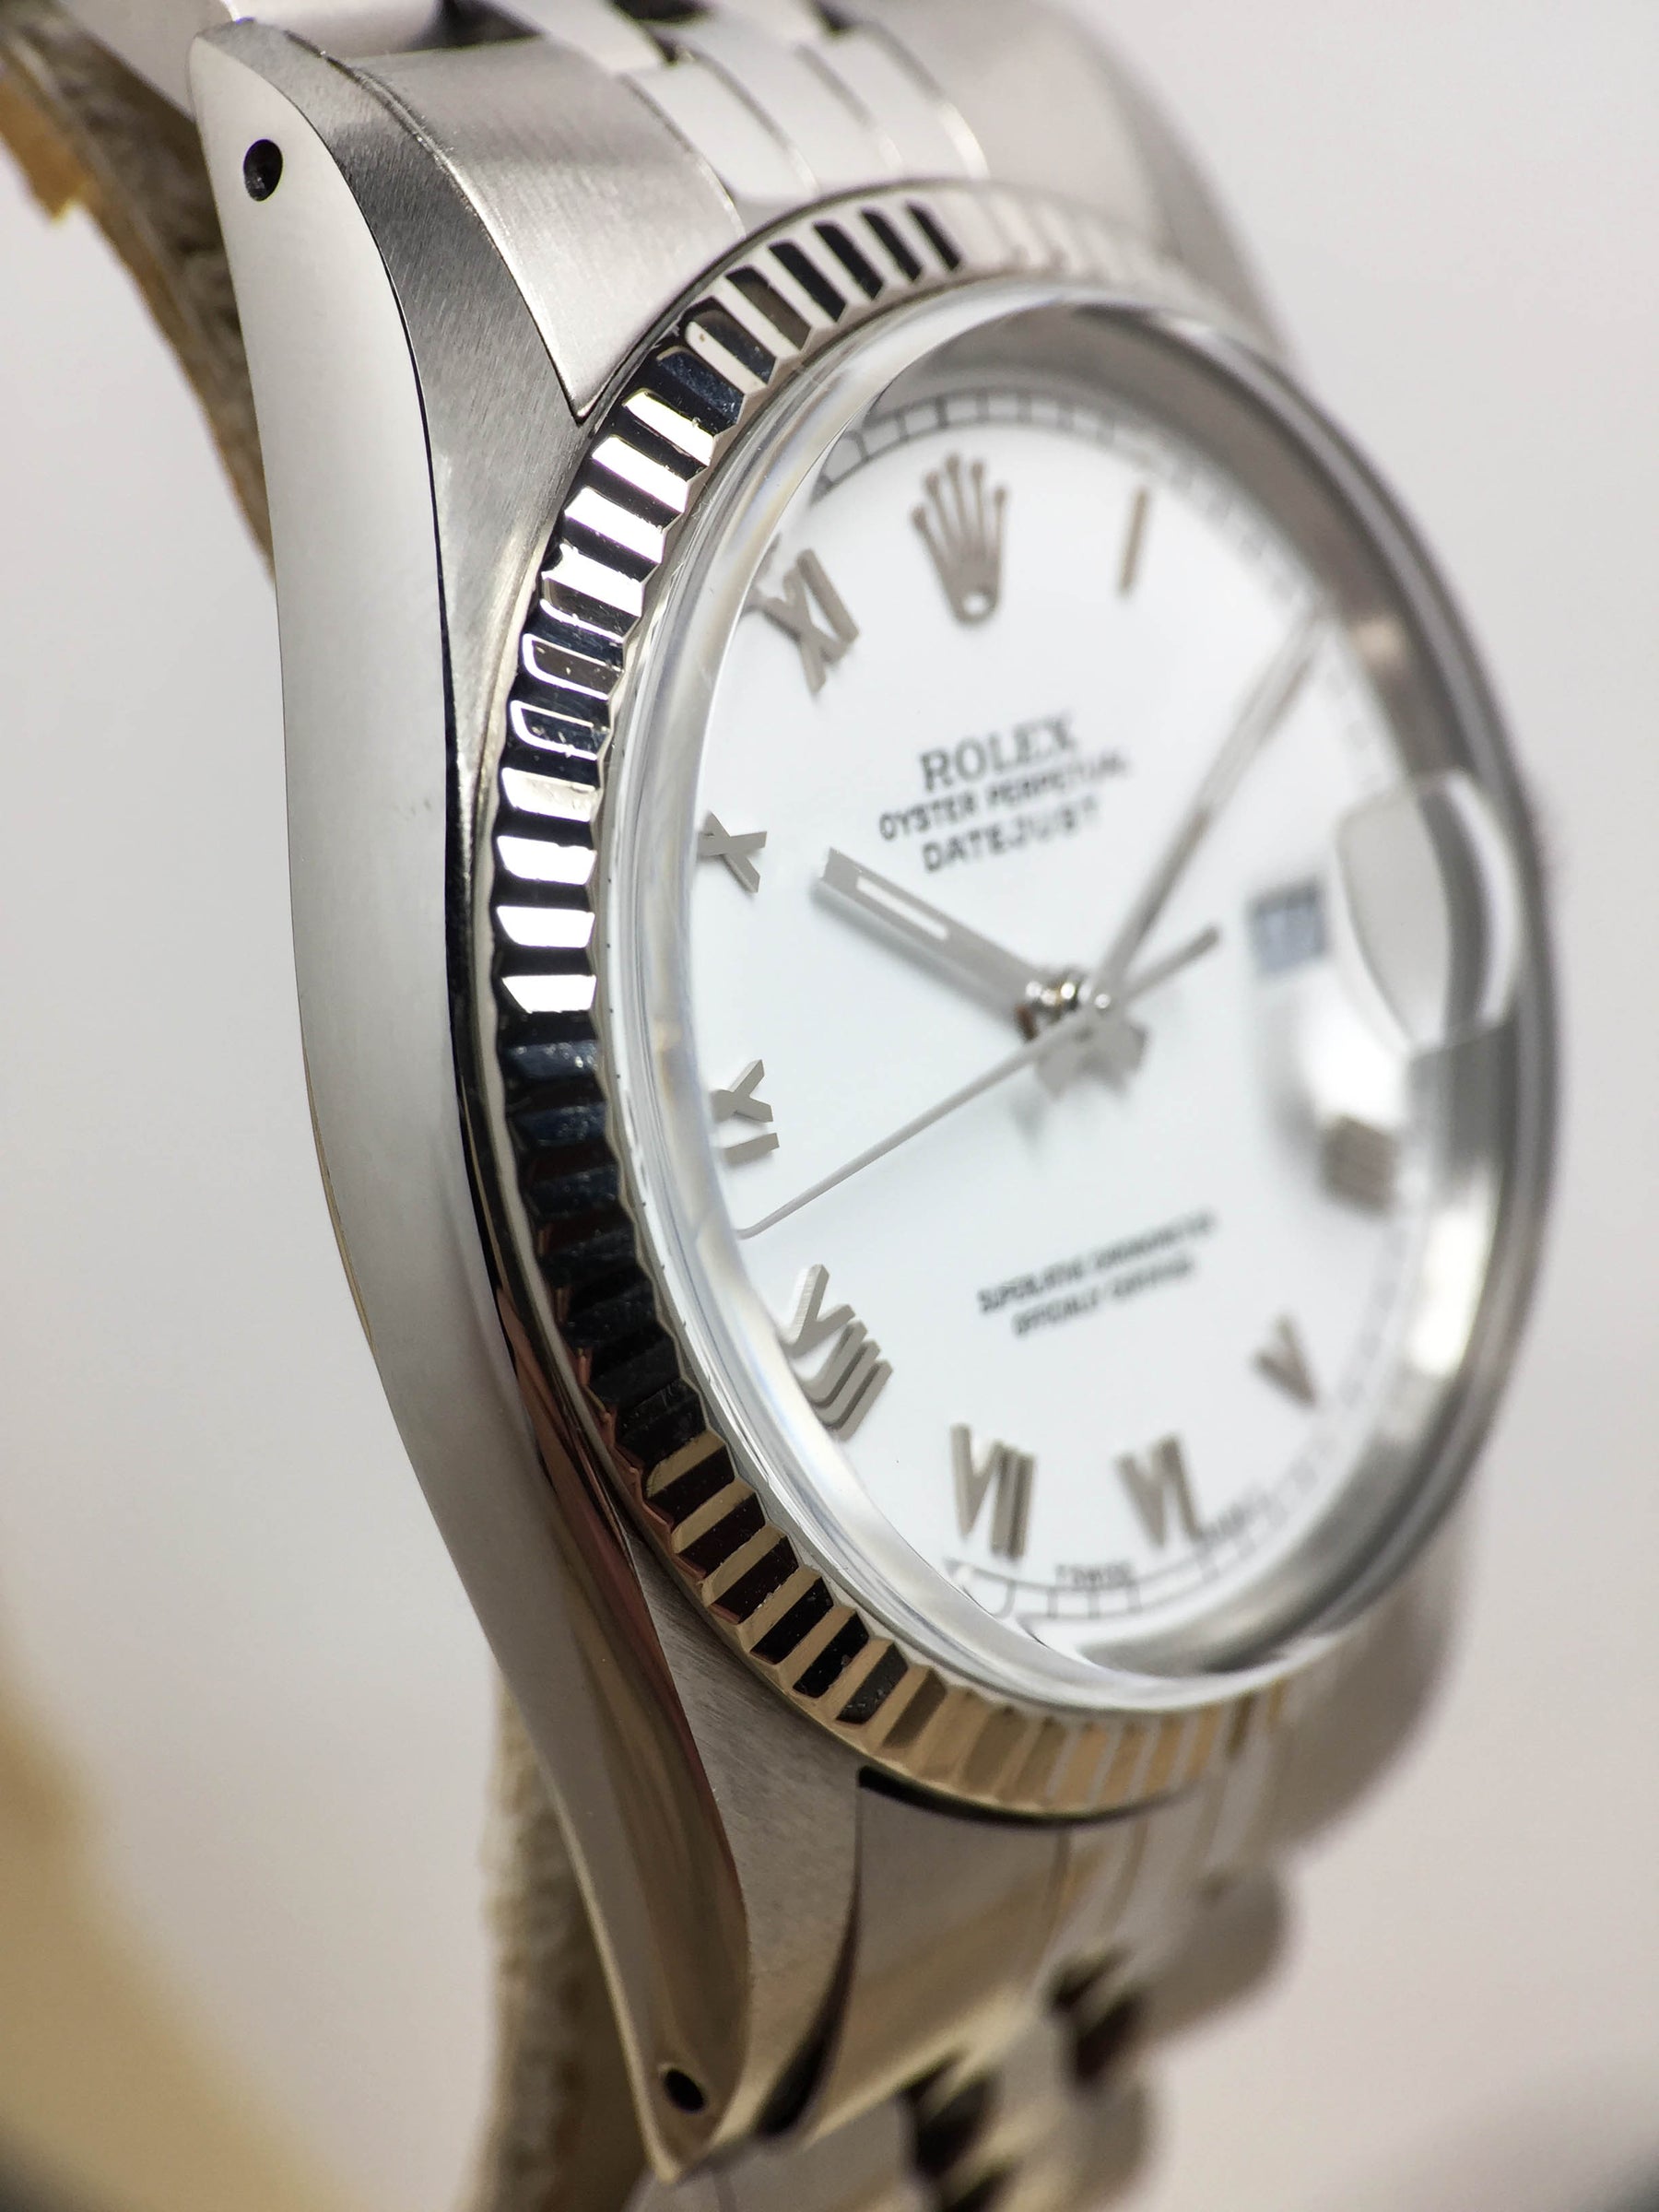 1987 Rolex Datejust White Roman Dial Ref. 16014